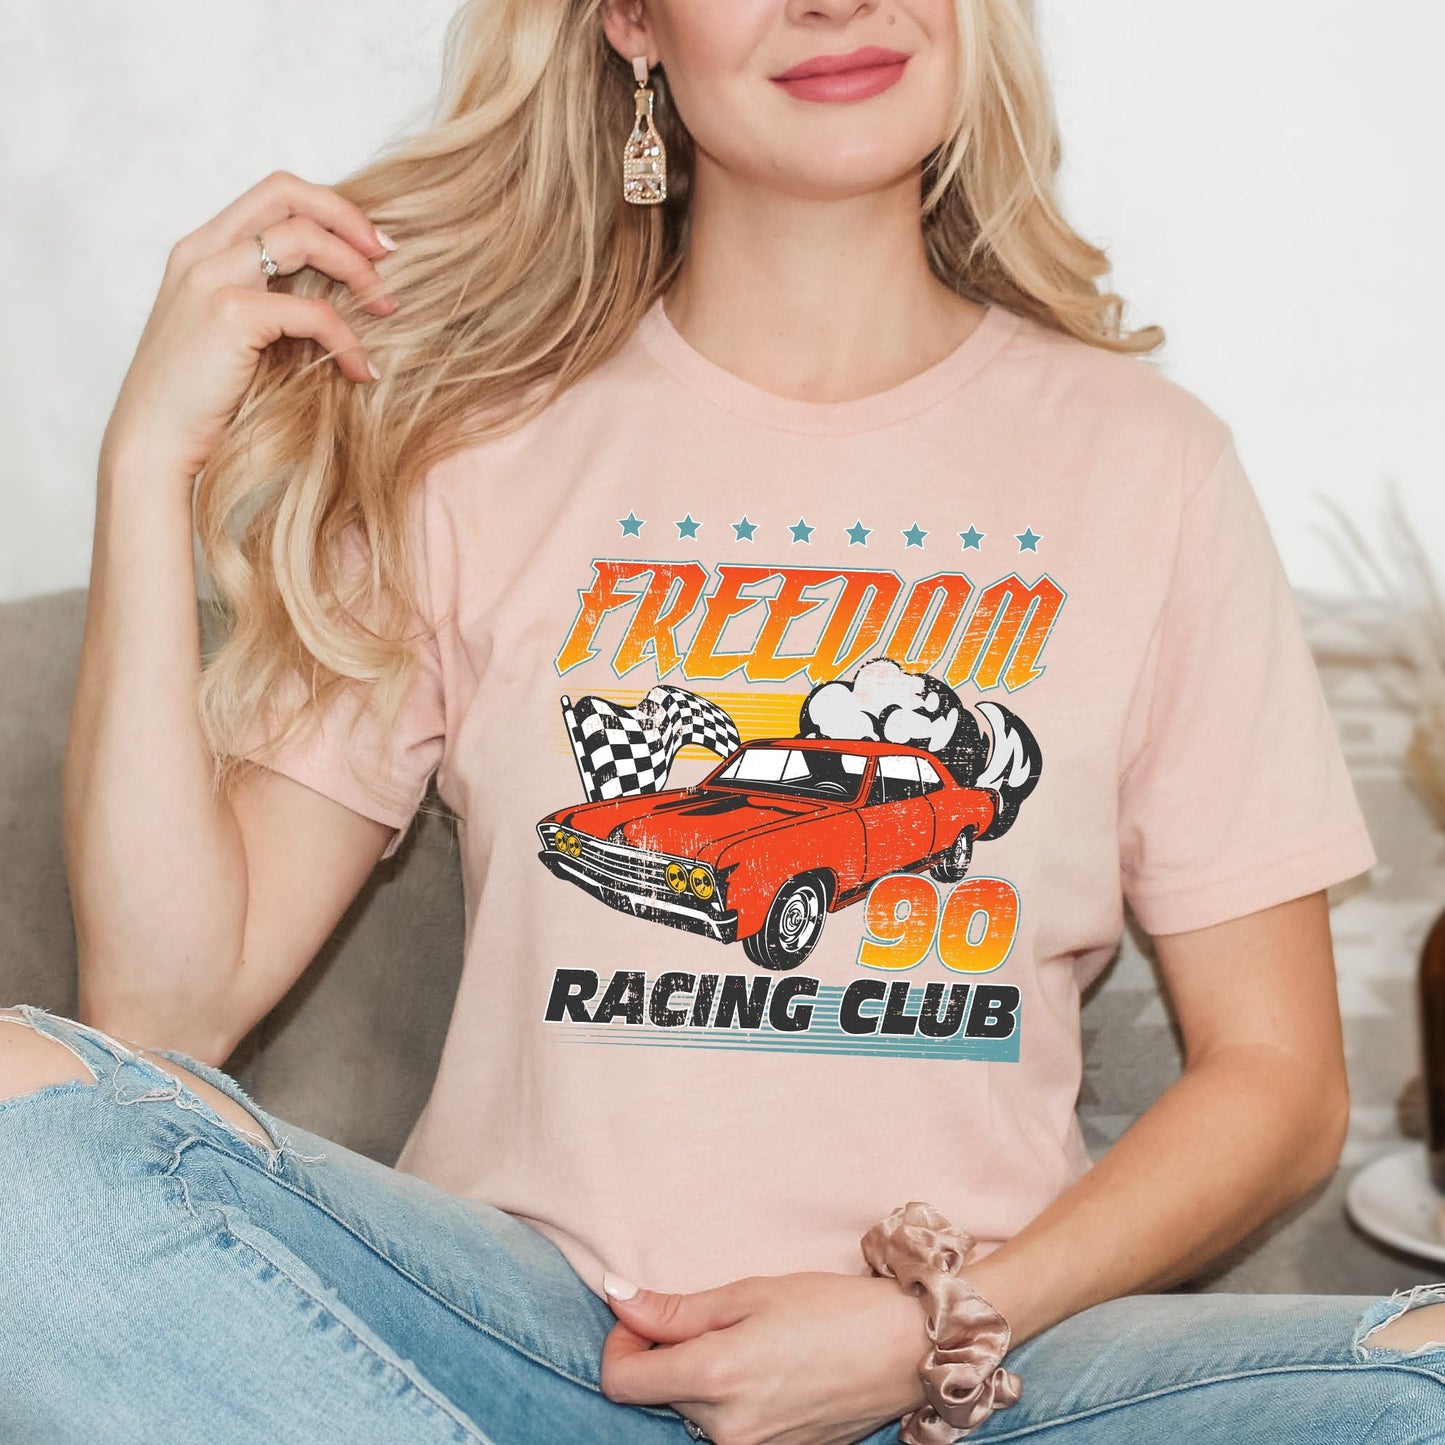 Freedom Racing Club | Short Sleeve Graphic Tee